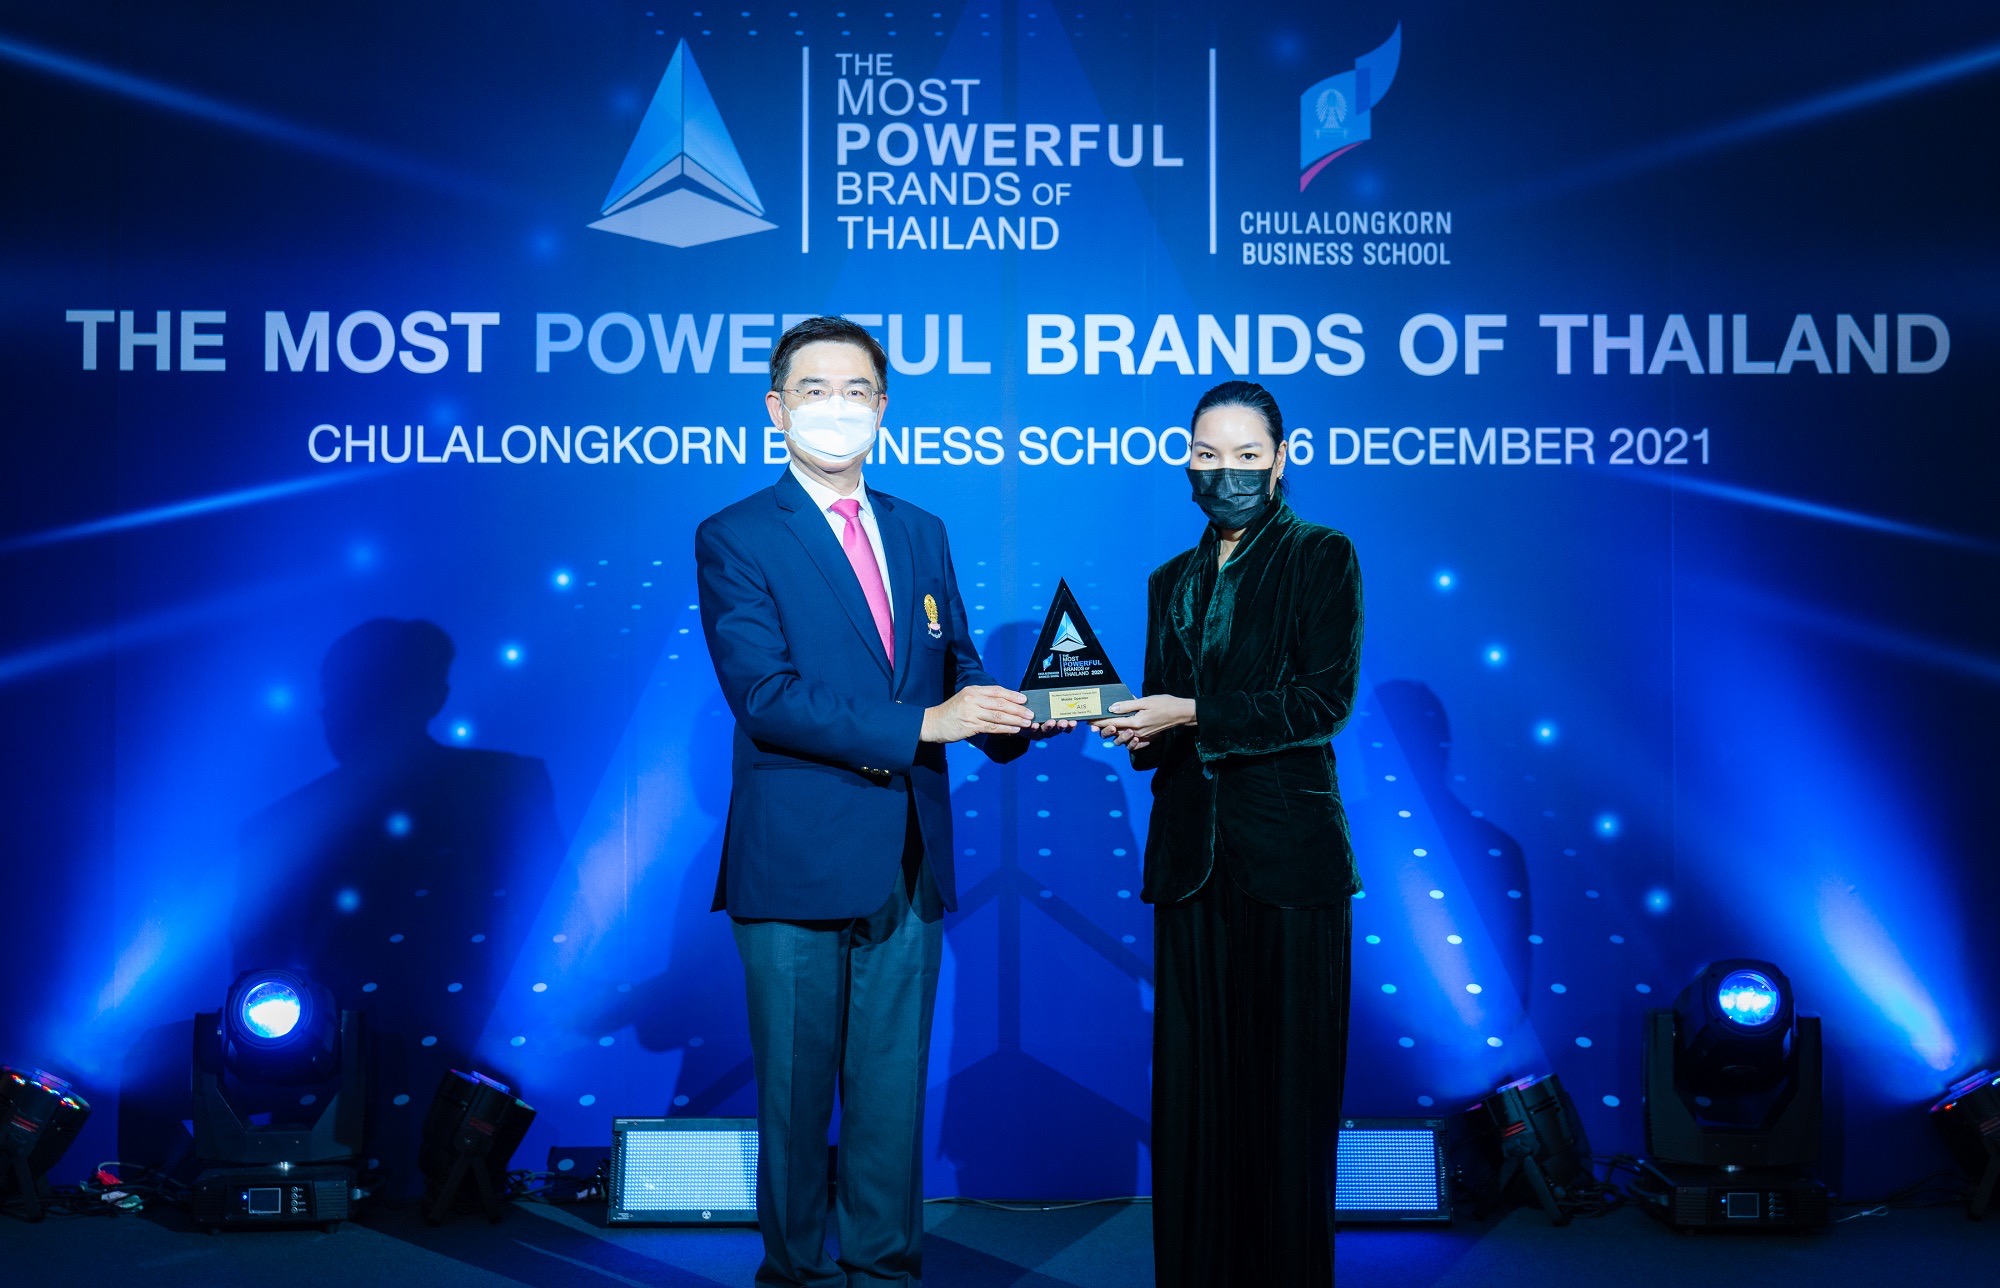 AIS คว้ารางวัลแบรนด์ทรงพลังสูงสุดในกลุ่มโทรคมนาคมต่อเนื่อง 5 ปีซ้อน The Most Powerful Brands of Thailand 2020 สะท้อนความแข็งแกร่งด้านดิจิทัลเทคโนโลยี ตอกย้ำการเป็นที่ 1 ตัวจริงจากเสียงผู้บริโภค